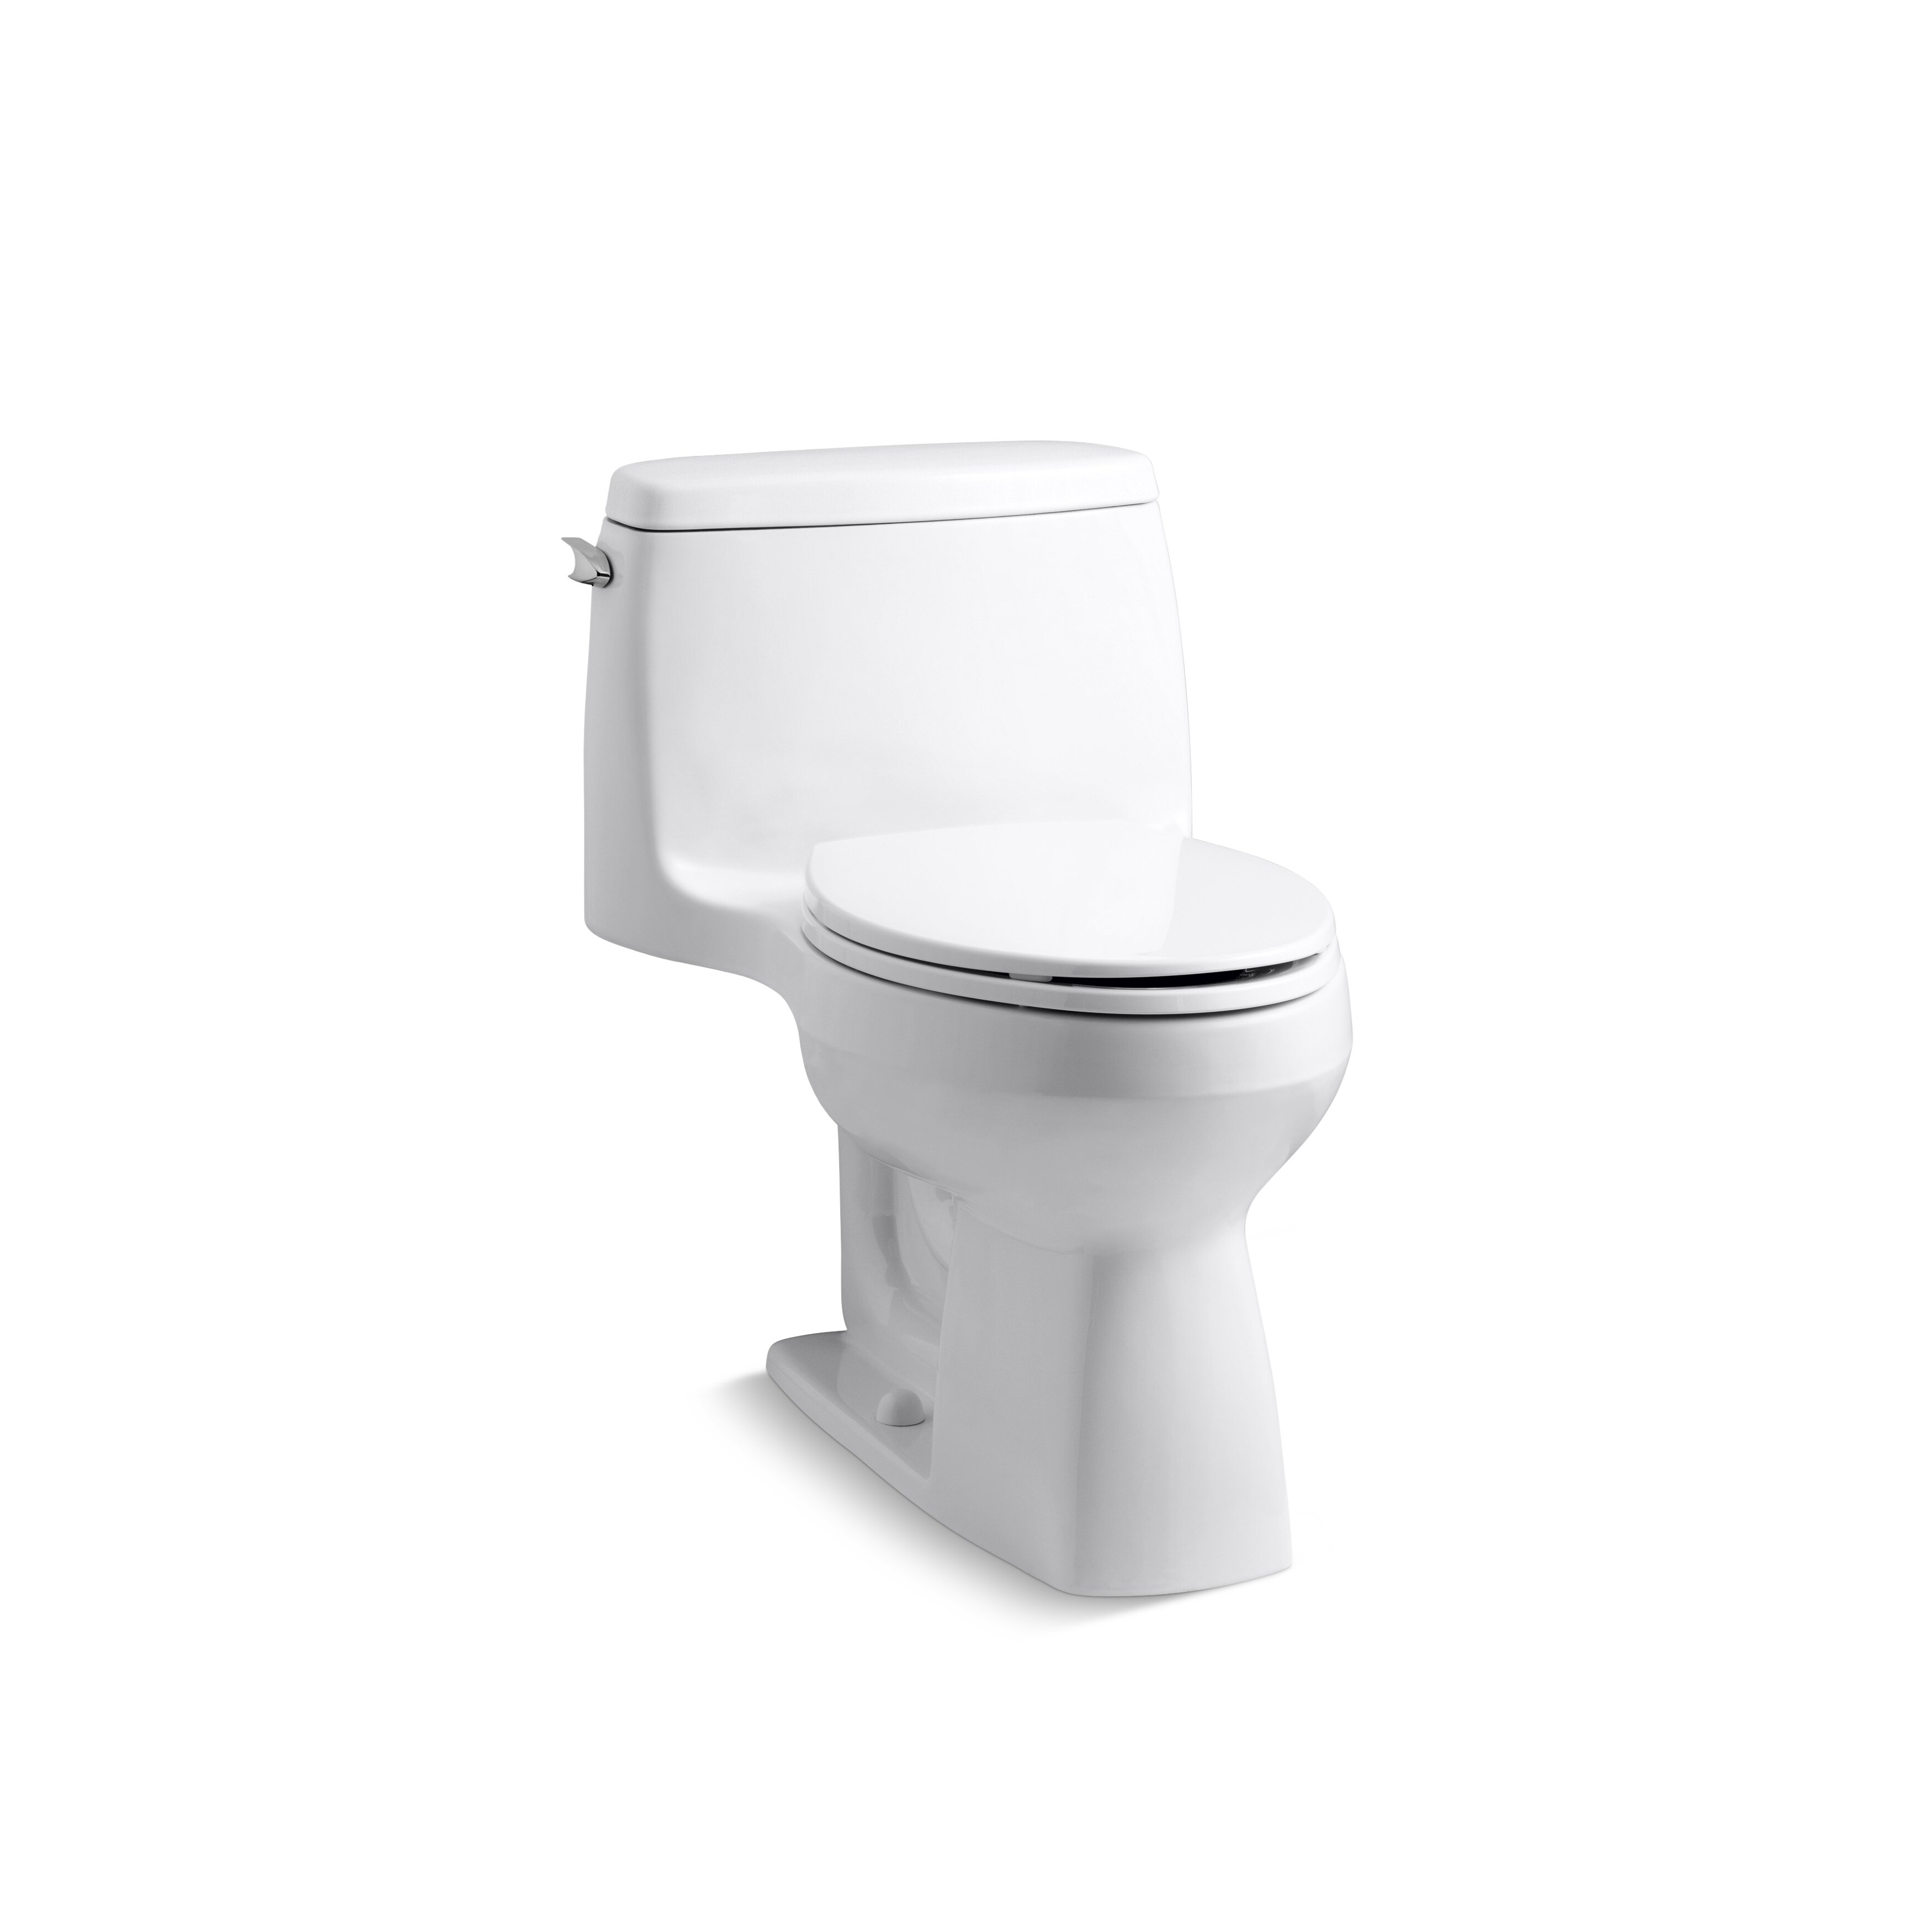 Is Kohler Santa Rosa A Good Toilet Cnb Solutions